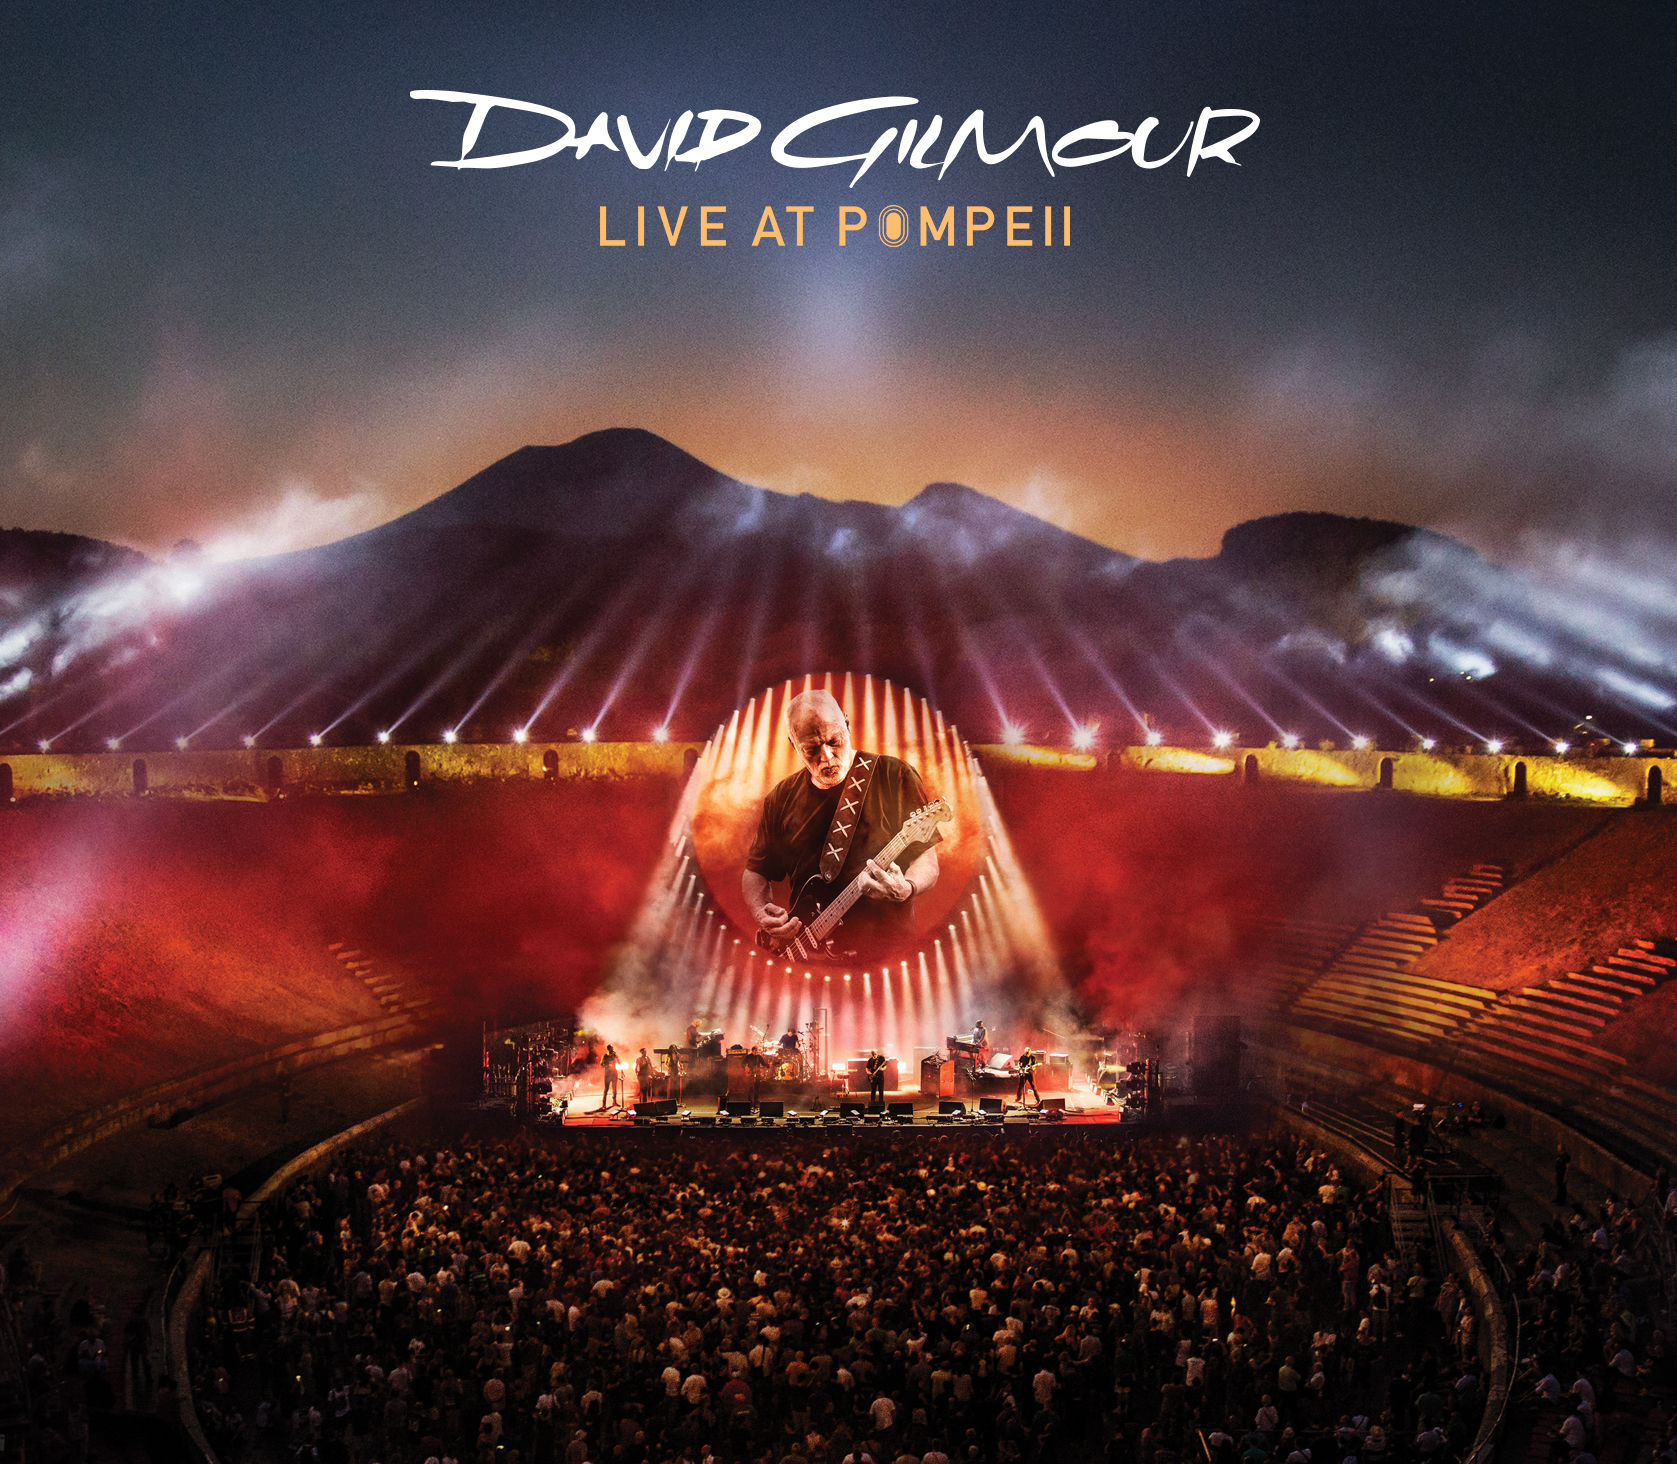 David Gilmour Live At Pompeii (2cd Set)